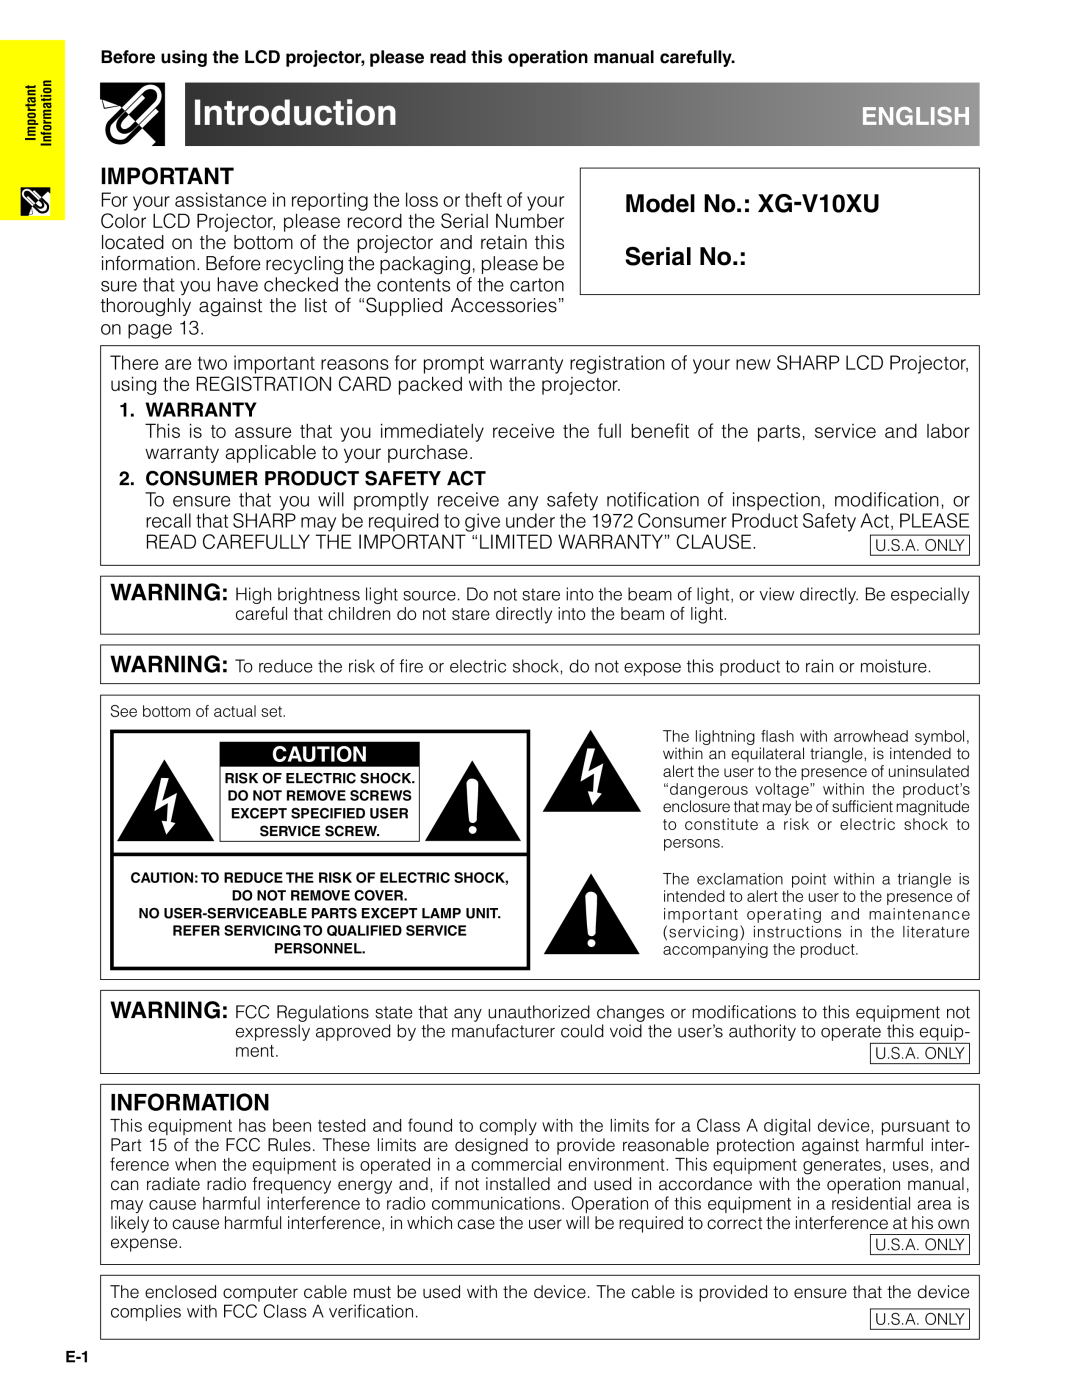 Sharp Introduction, English, Model No. XG-V10XU Serial No, Information, Warranty, Consumer Product Safety Act 